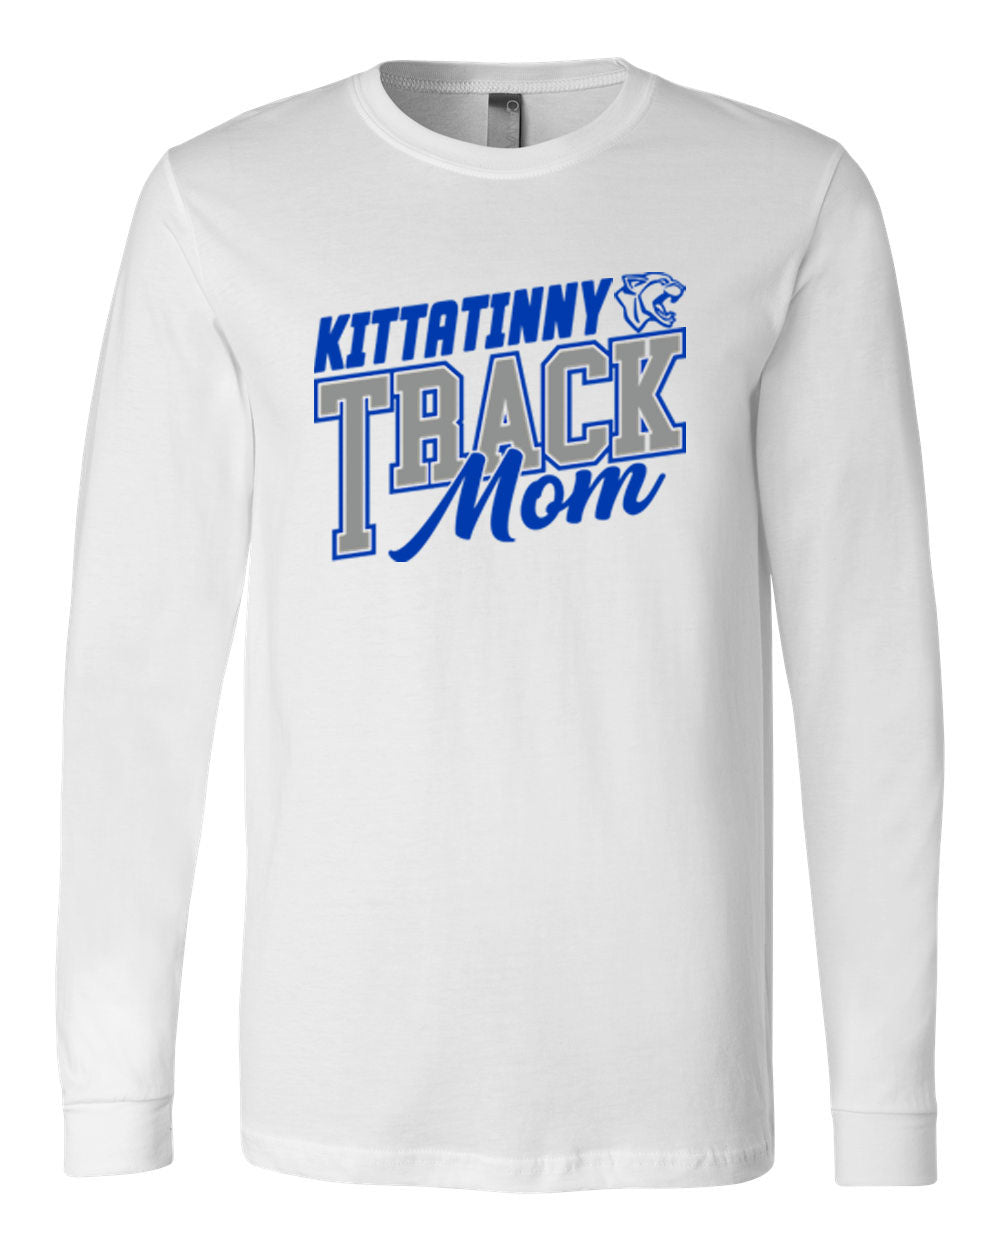 Kittatinny Track Design 4 Long Sleeve Shirt